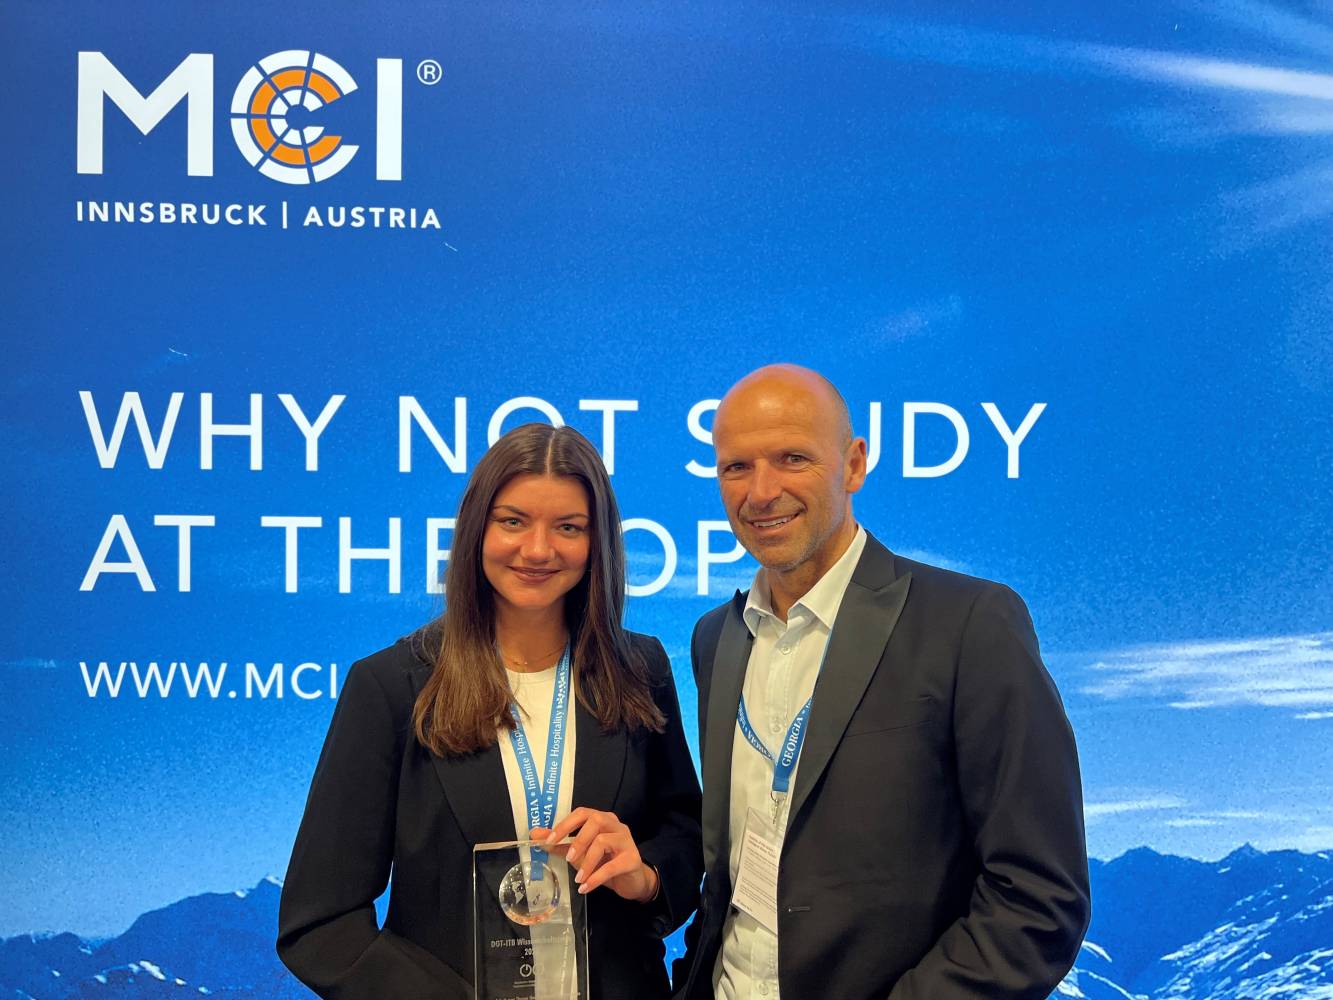 The winner of the DGT Science Award Kathrin John with MCI program director Hubert Siller. © MCI